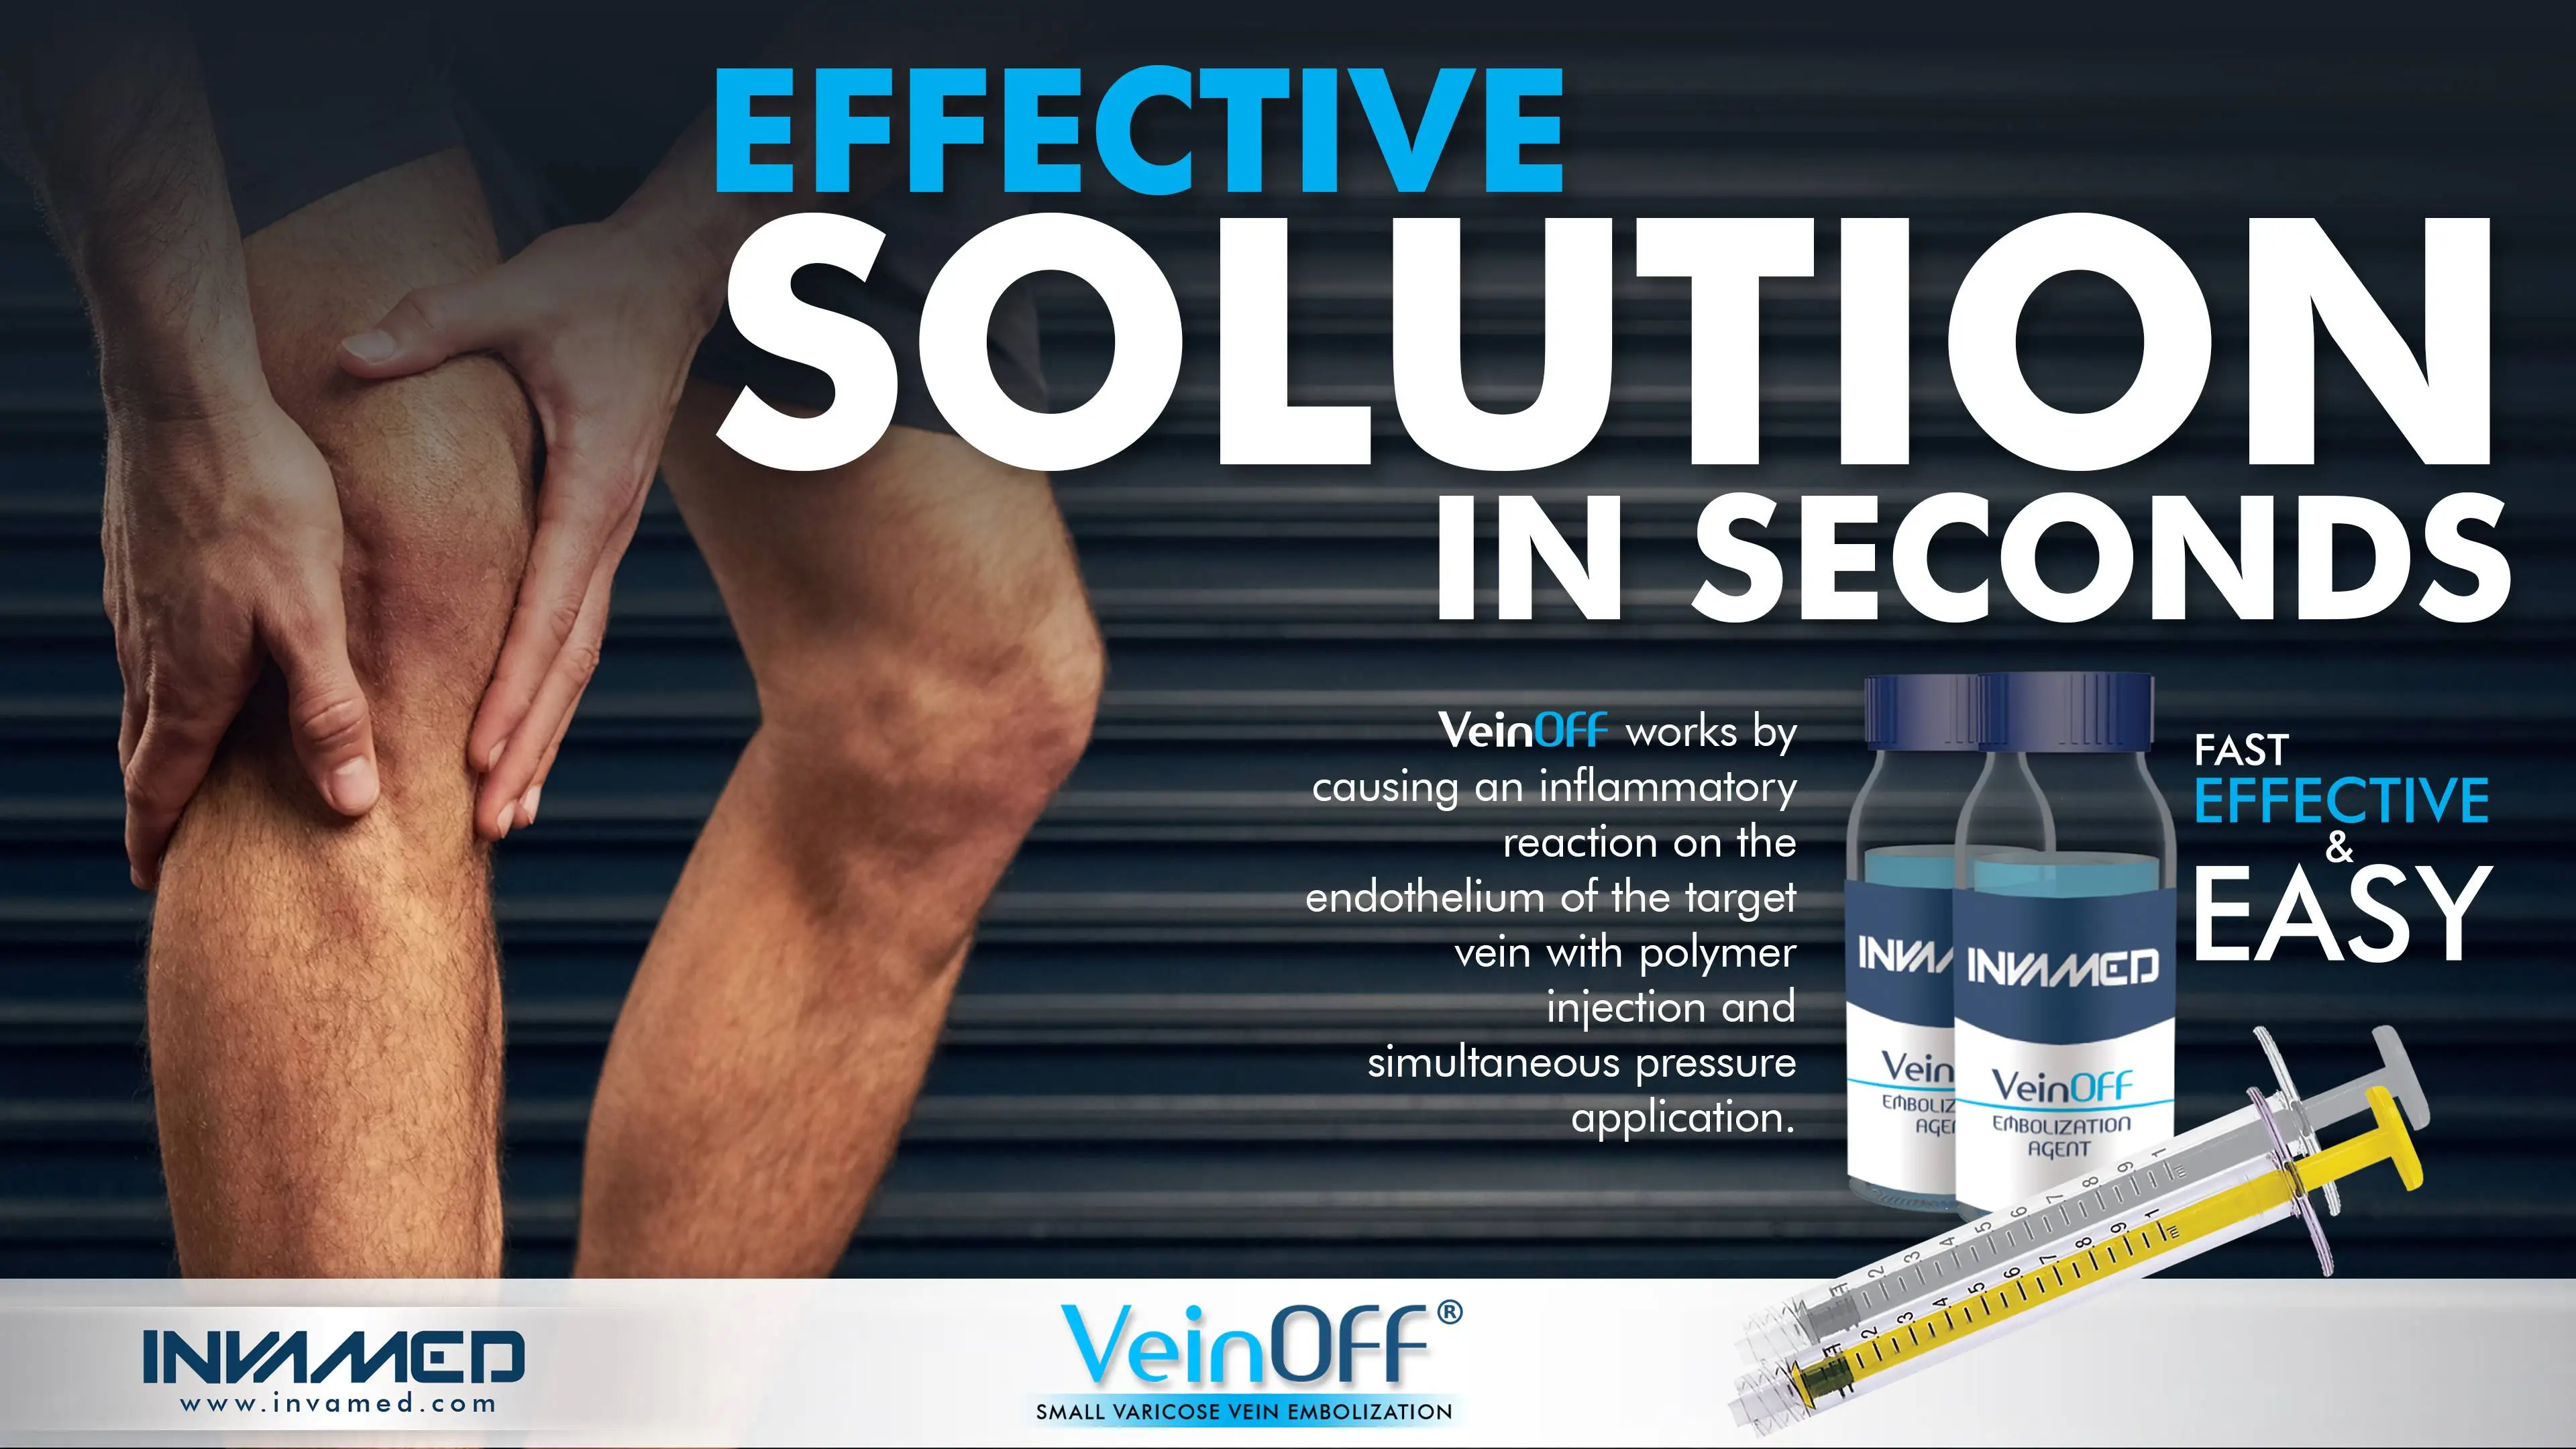 VeinOFF® Small Varicose Vein Embolization